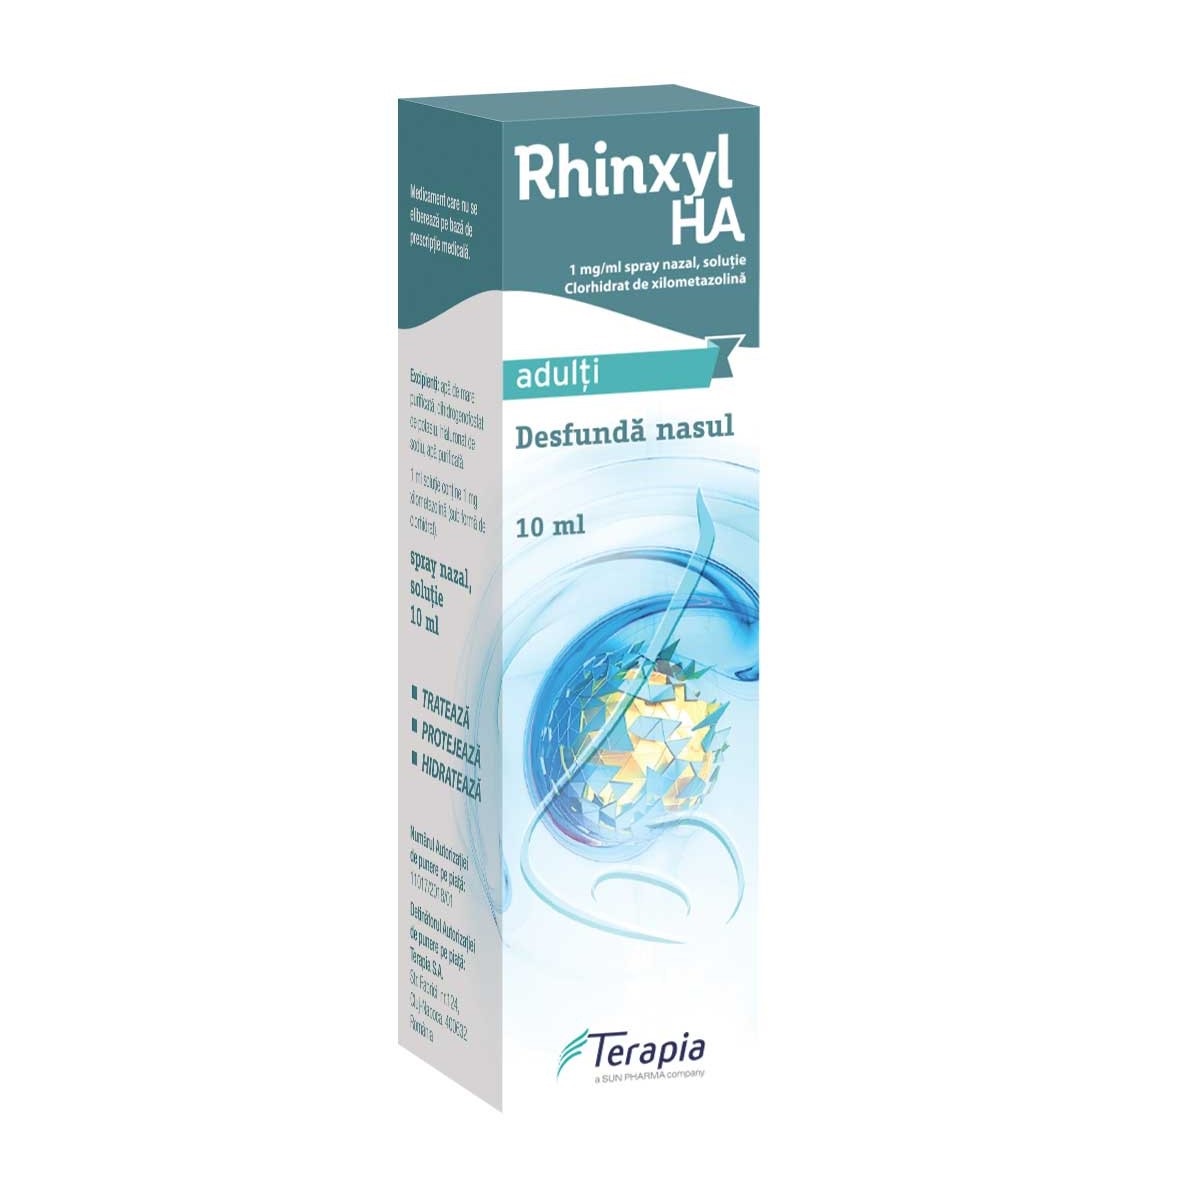 RHINXYL HA 1 mg/ml x 1